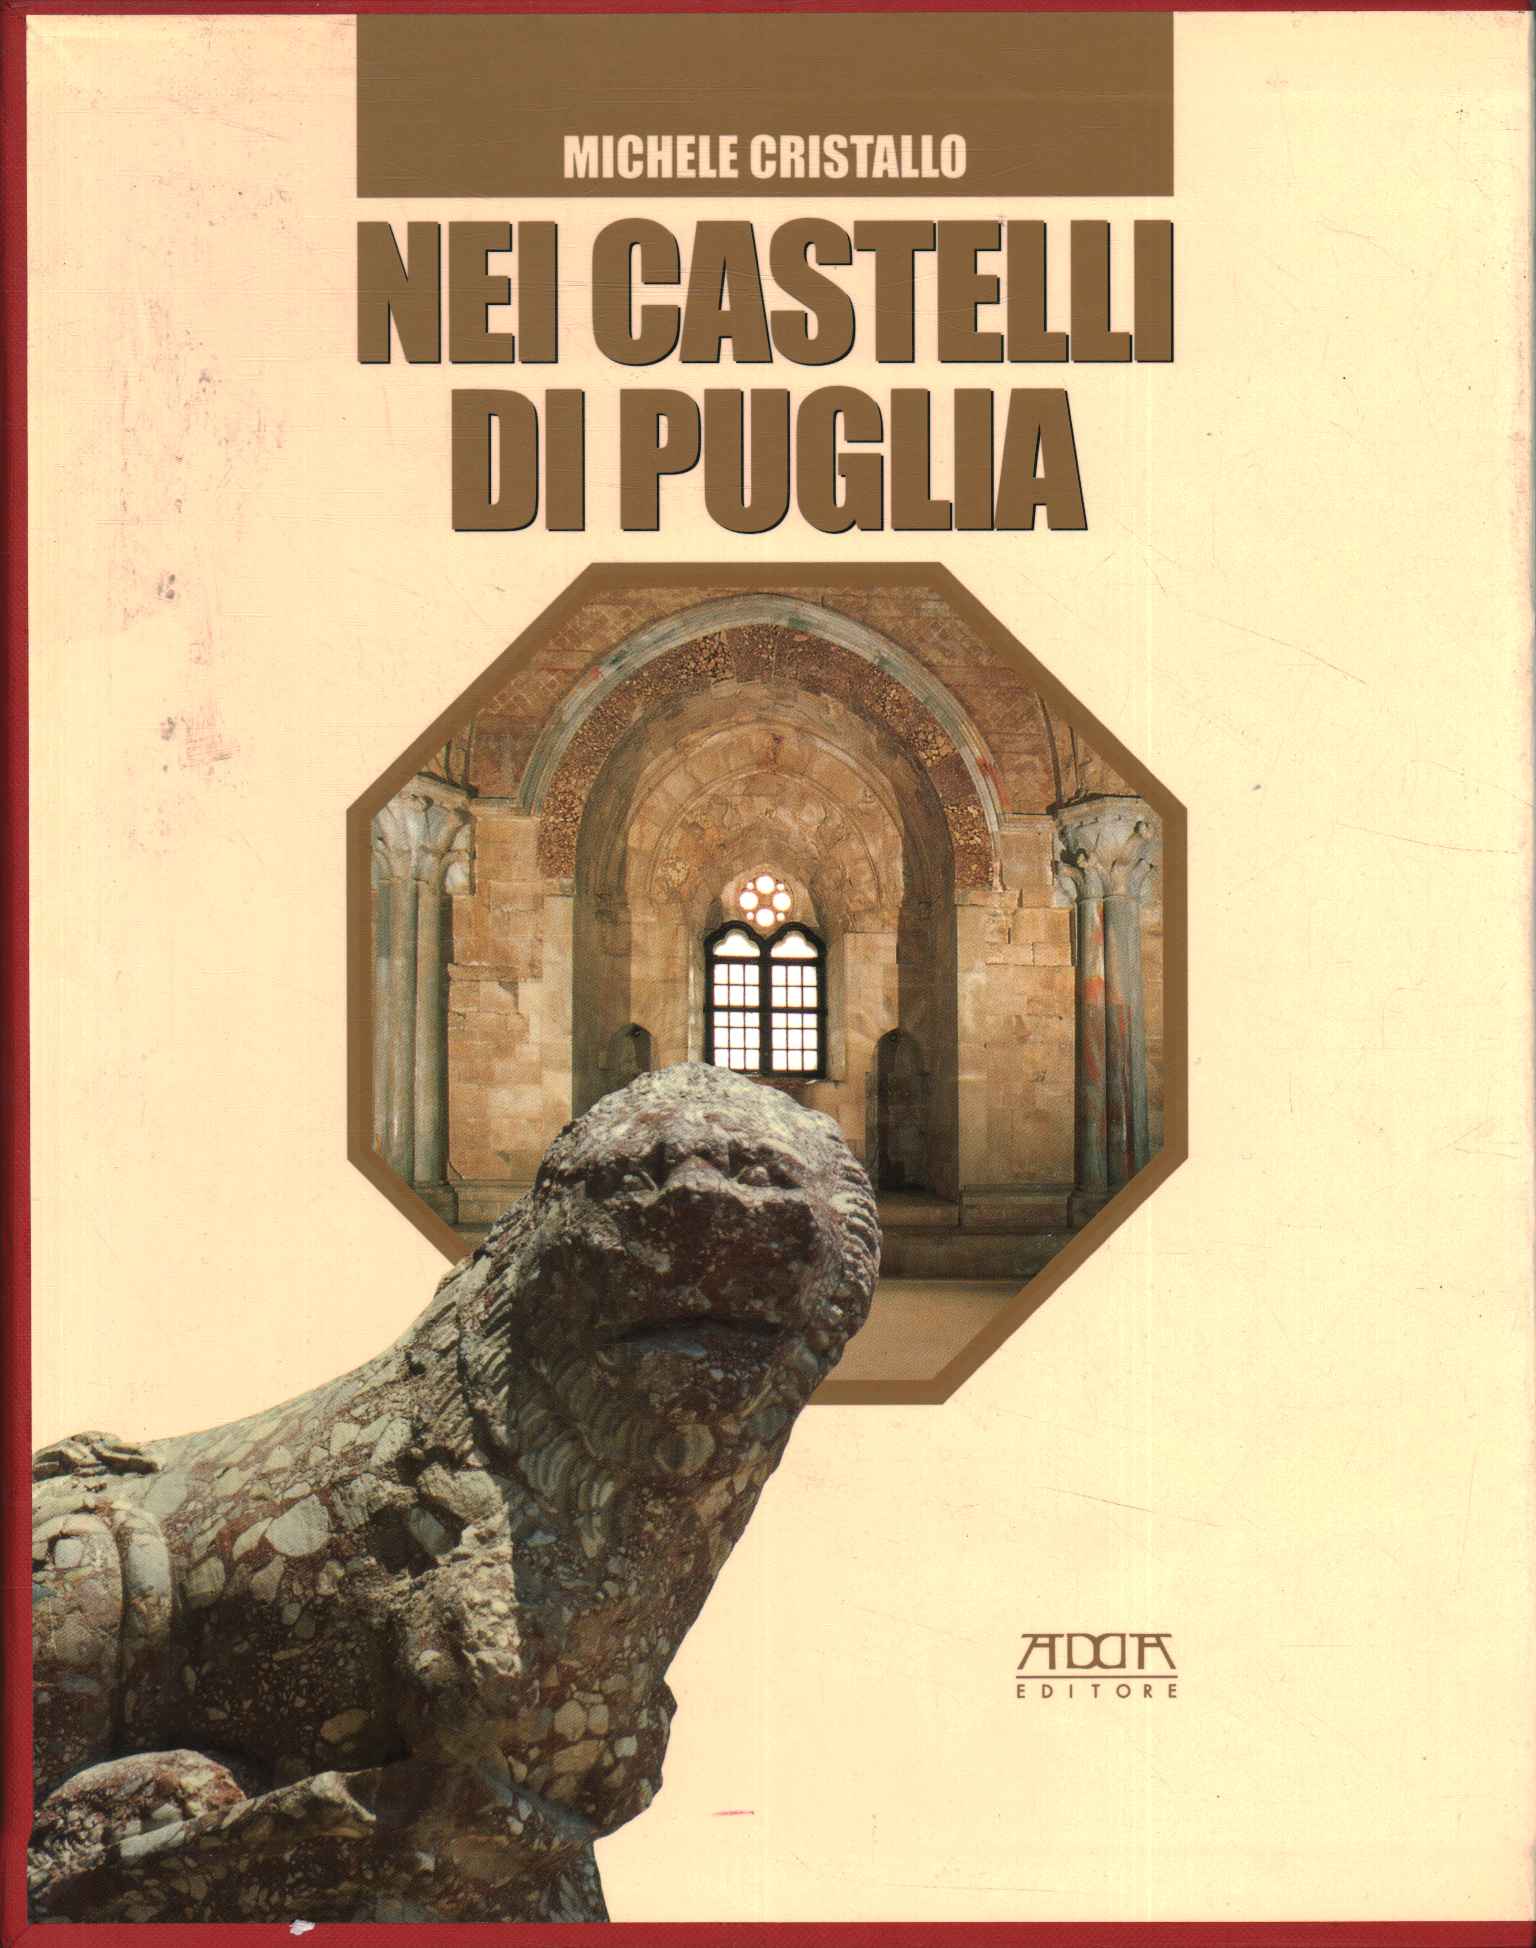 In the castles of Puglia